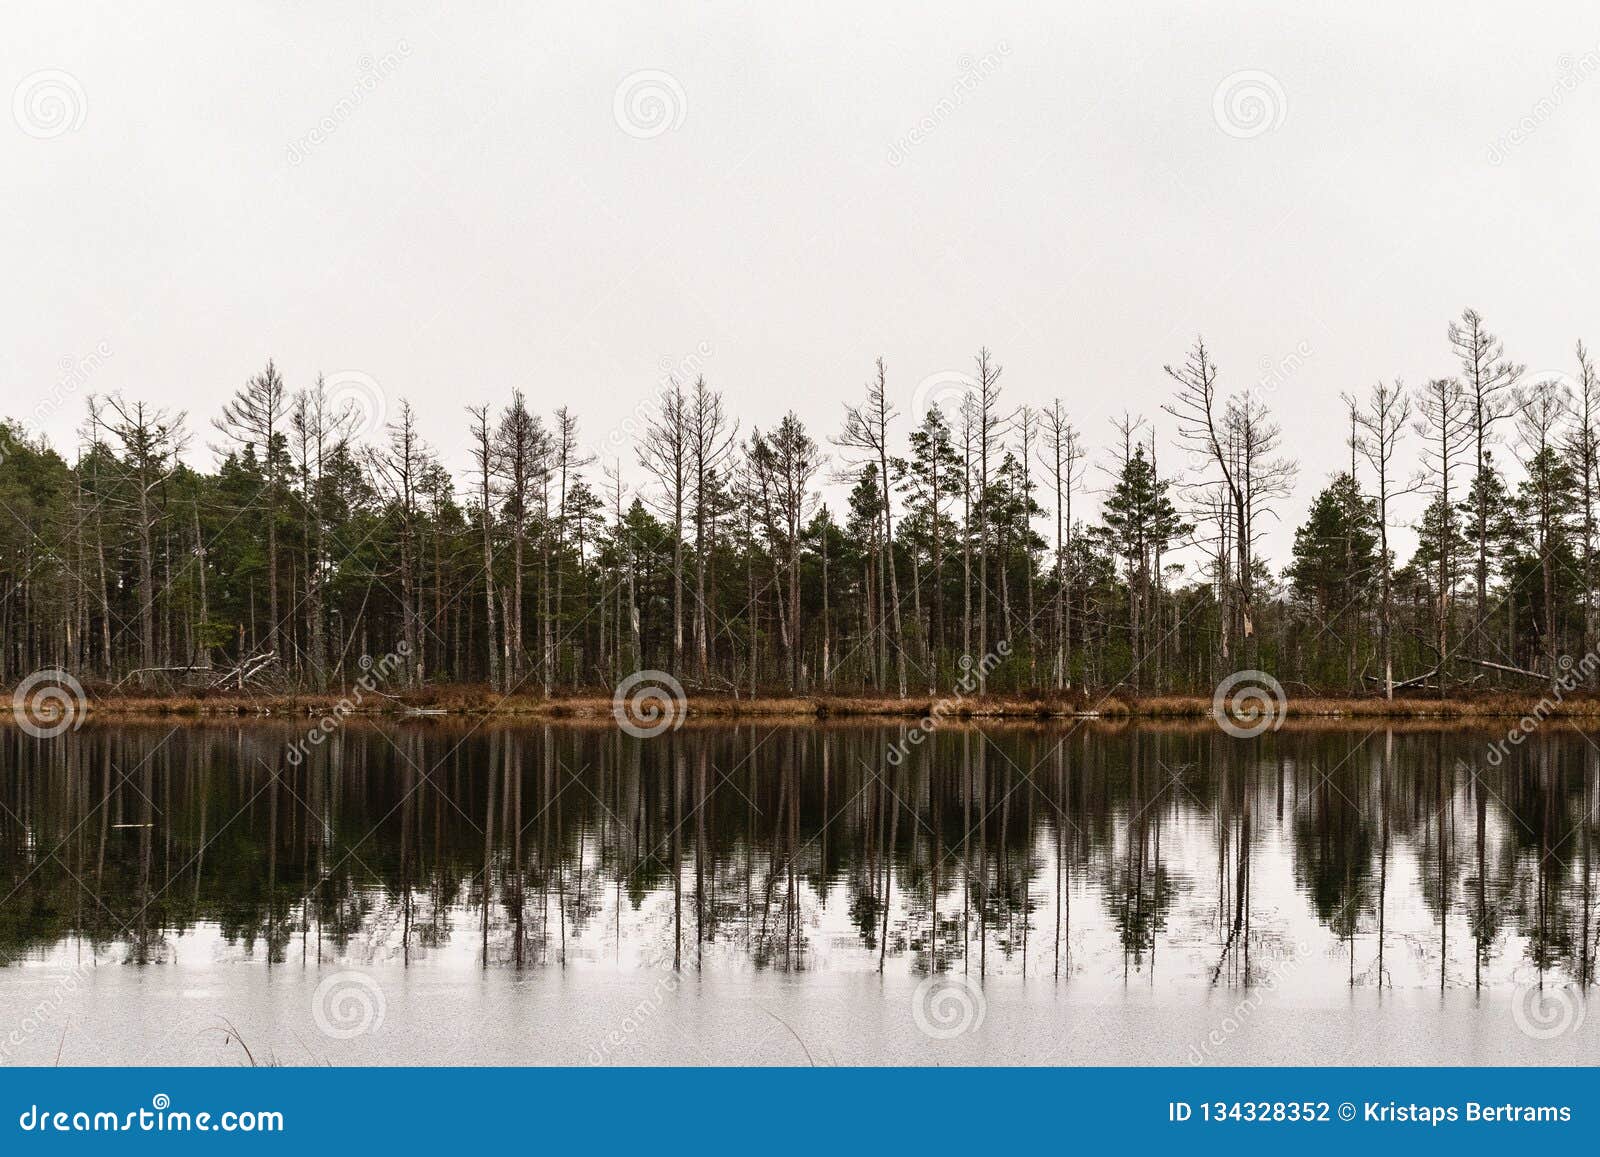 pine tree reflection in the marsh lake.